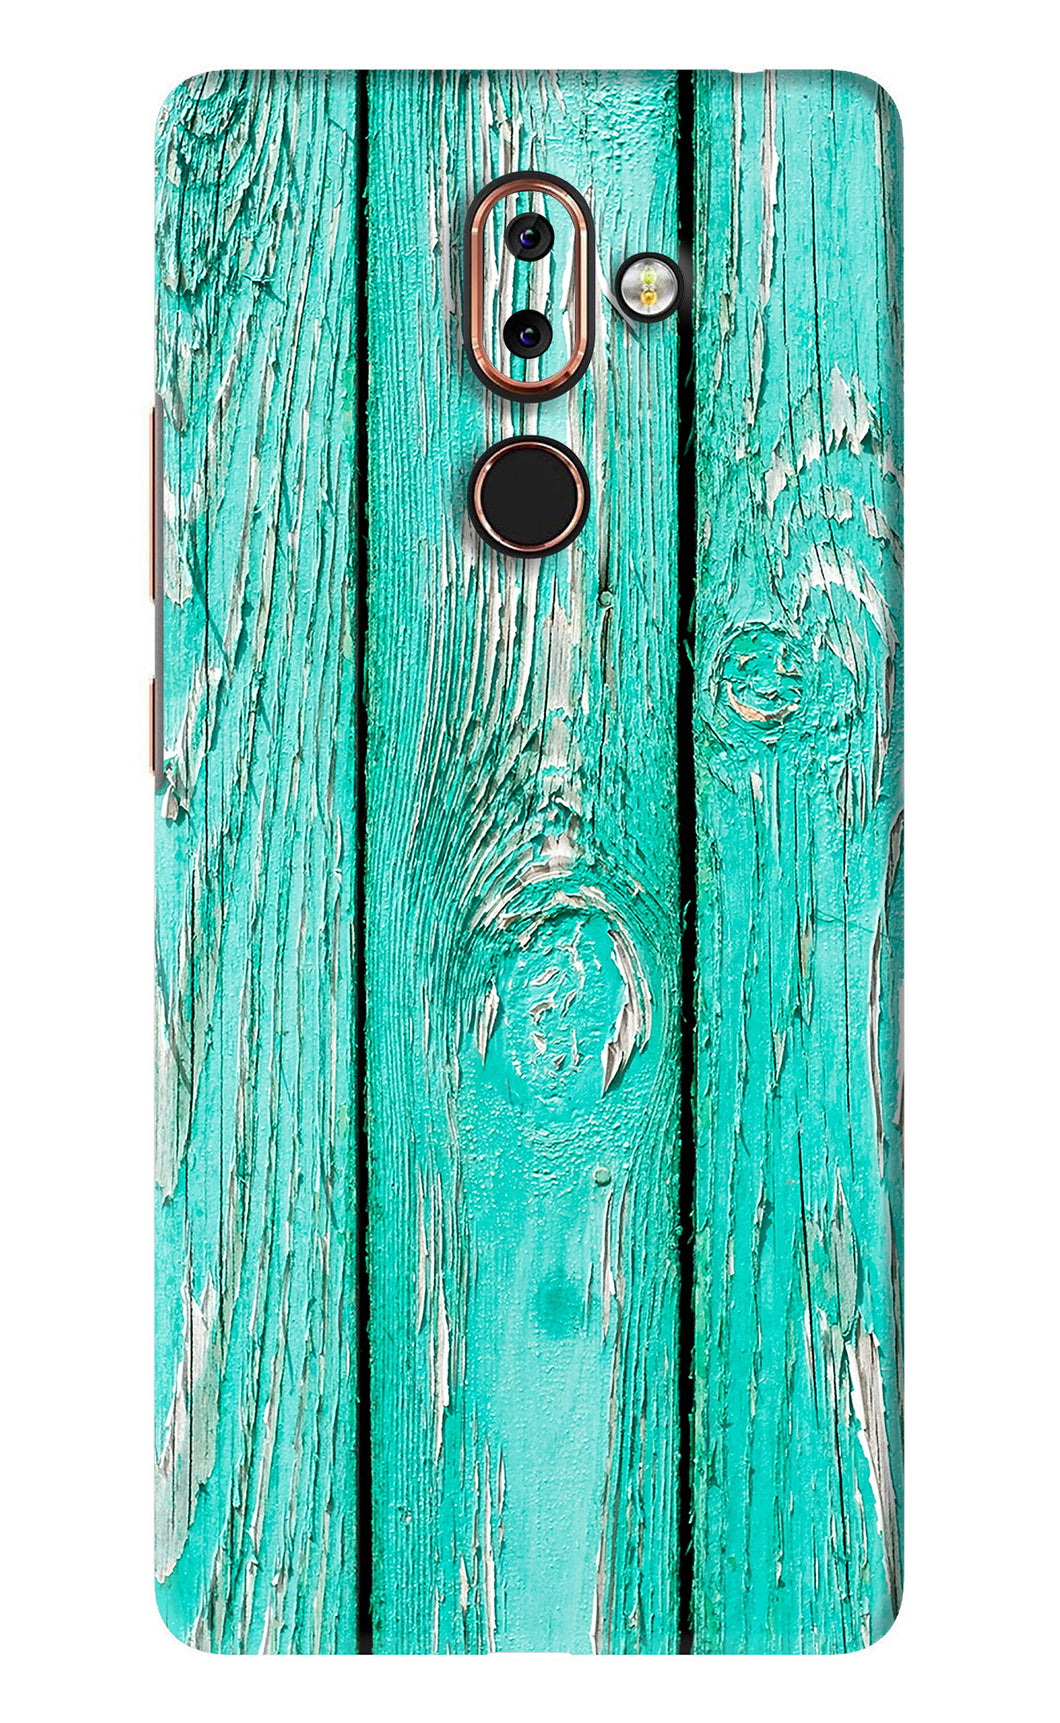 Blue Wood Nokia 7 Plus Back Skin Wrap